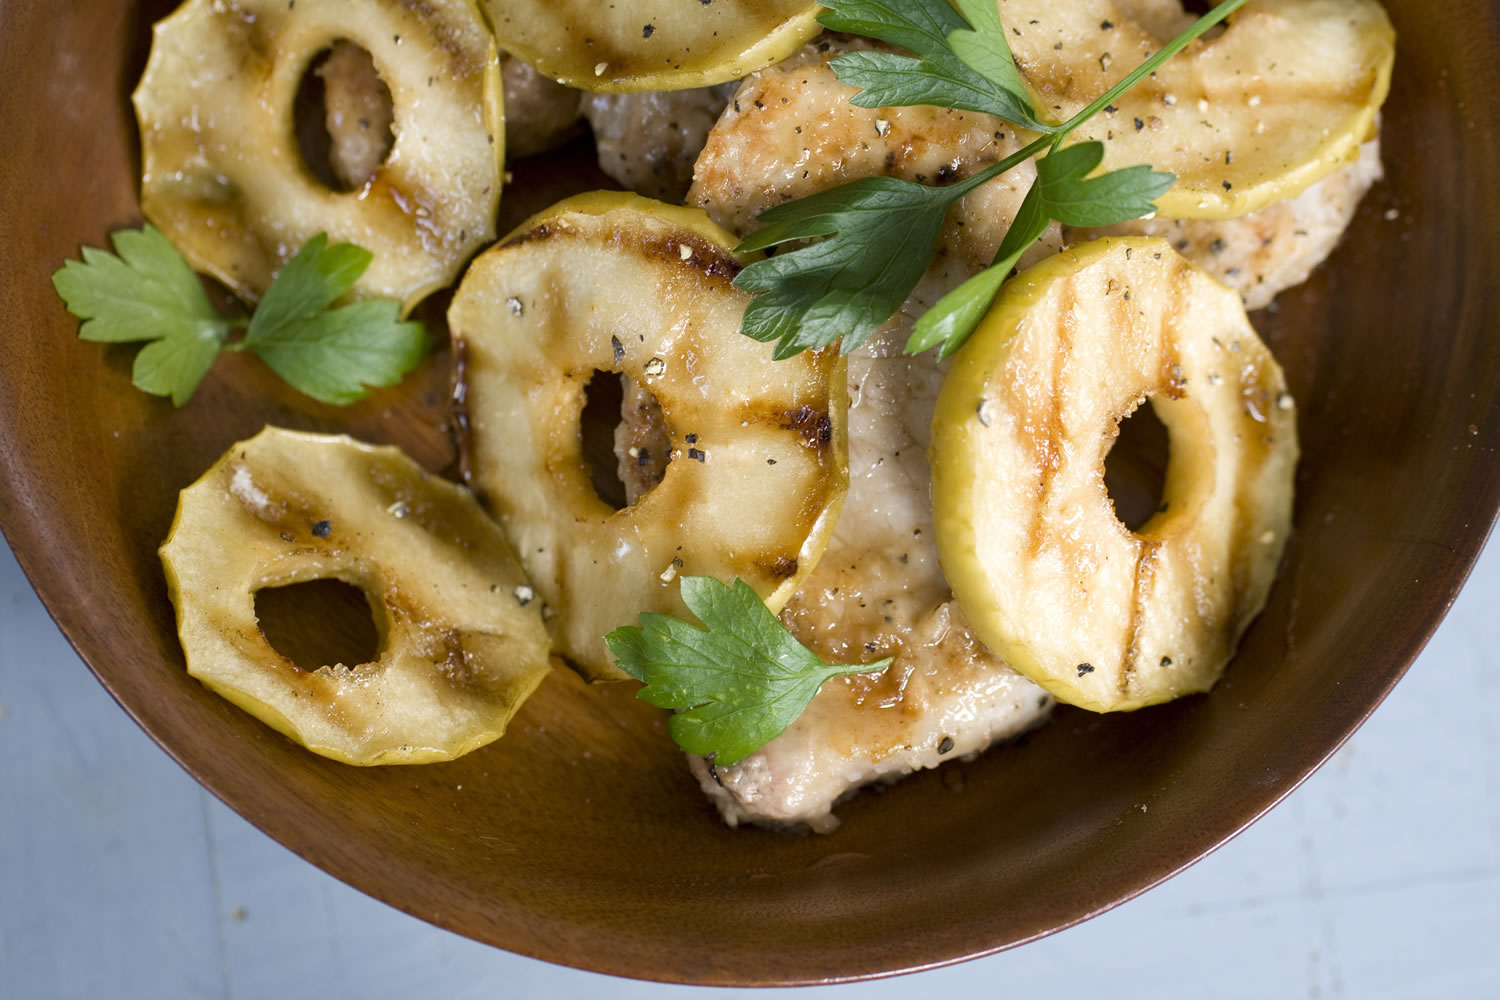 Grilled Maple-glazed Apple Slices make a delightful side dish alternative.